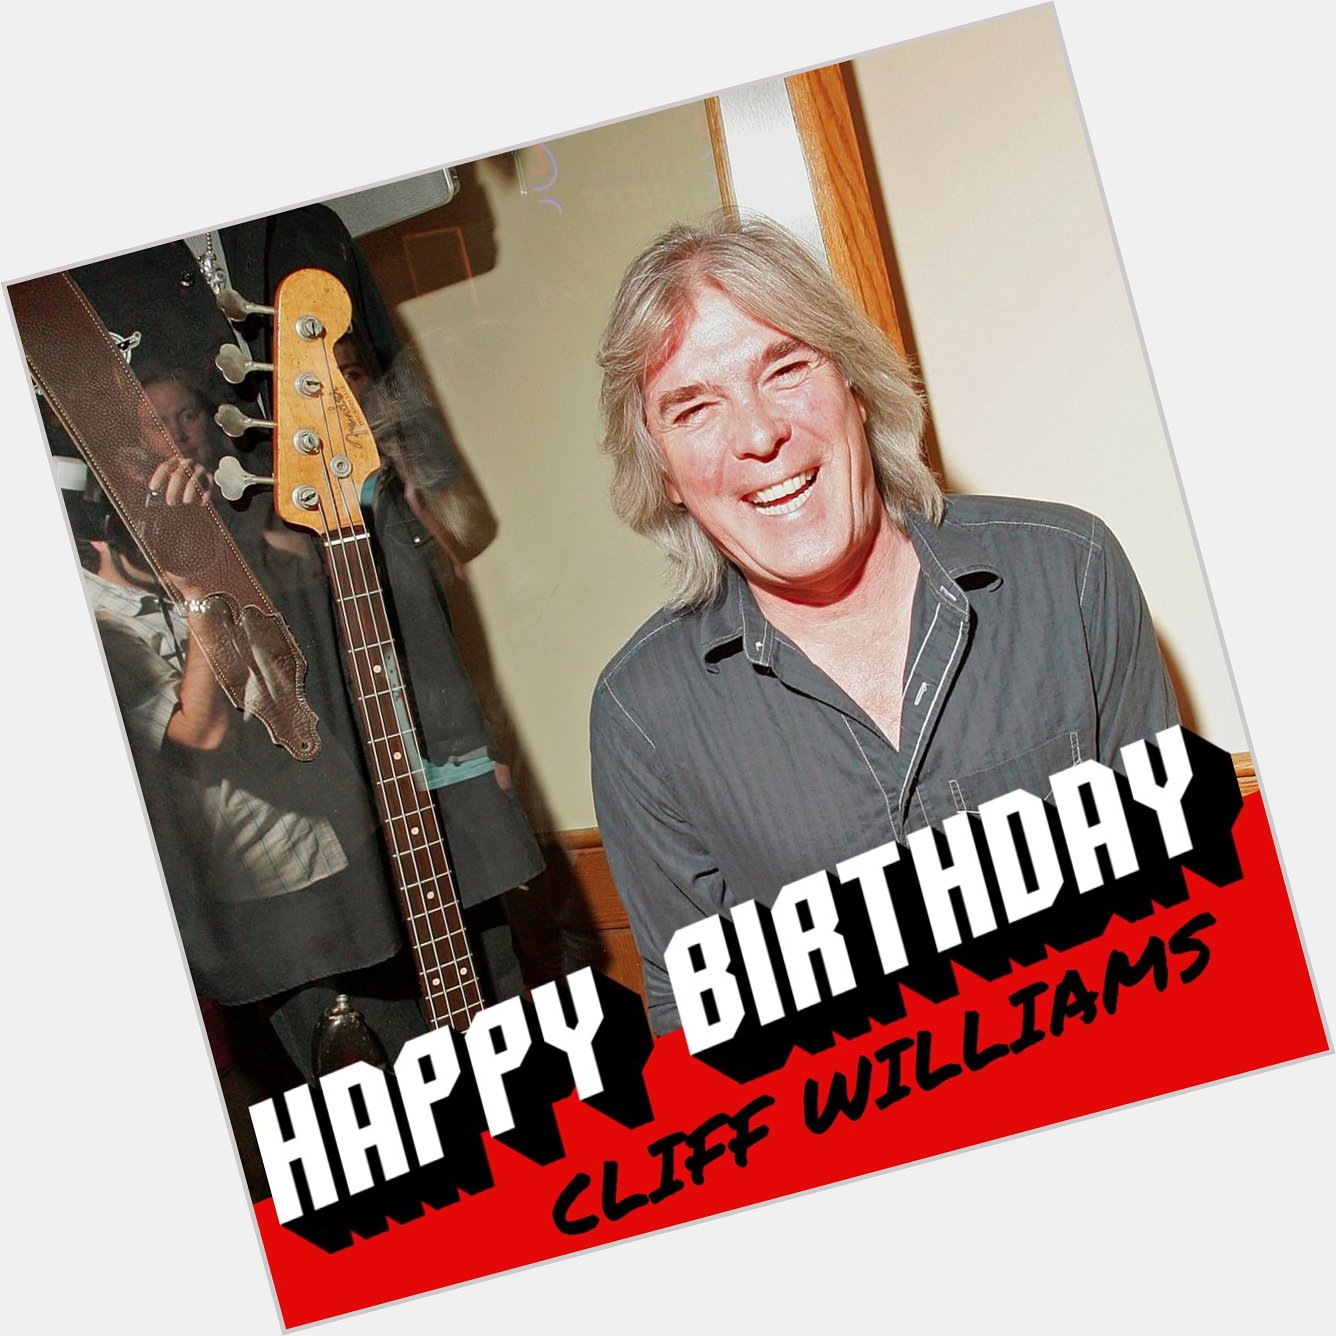 Happy birthday to Cliff Williams!  